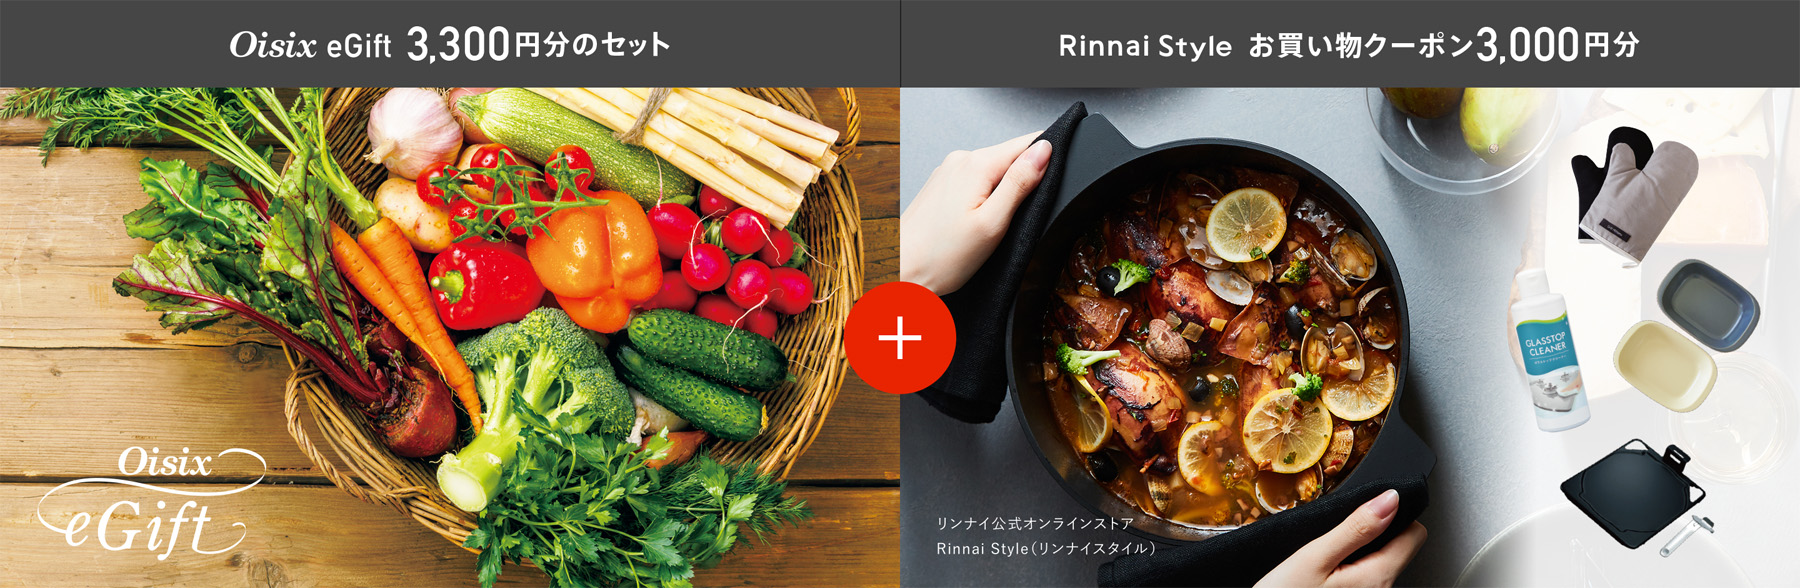 Oisix eGift 3,300円分のセット + Rinnai Style お買い物クーポン3,000円分